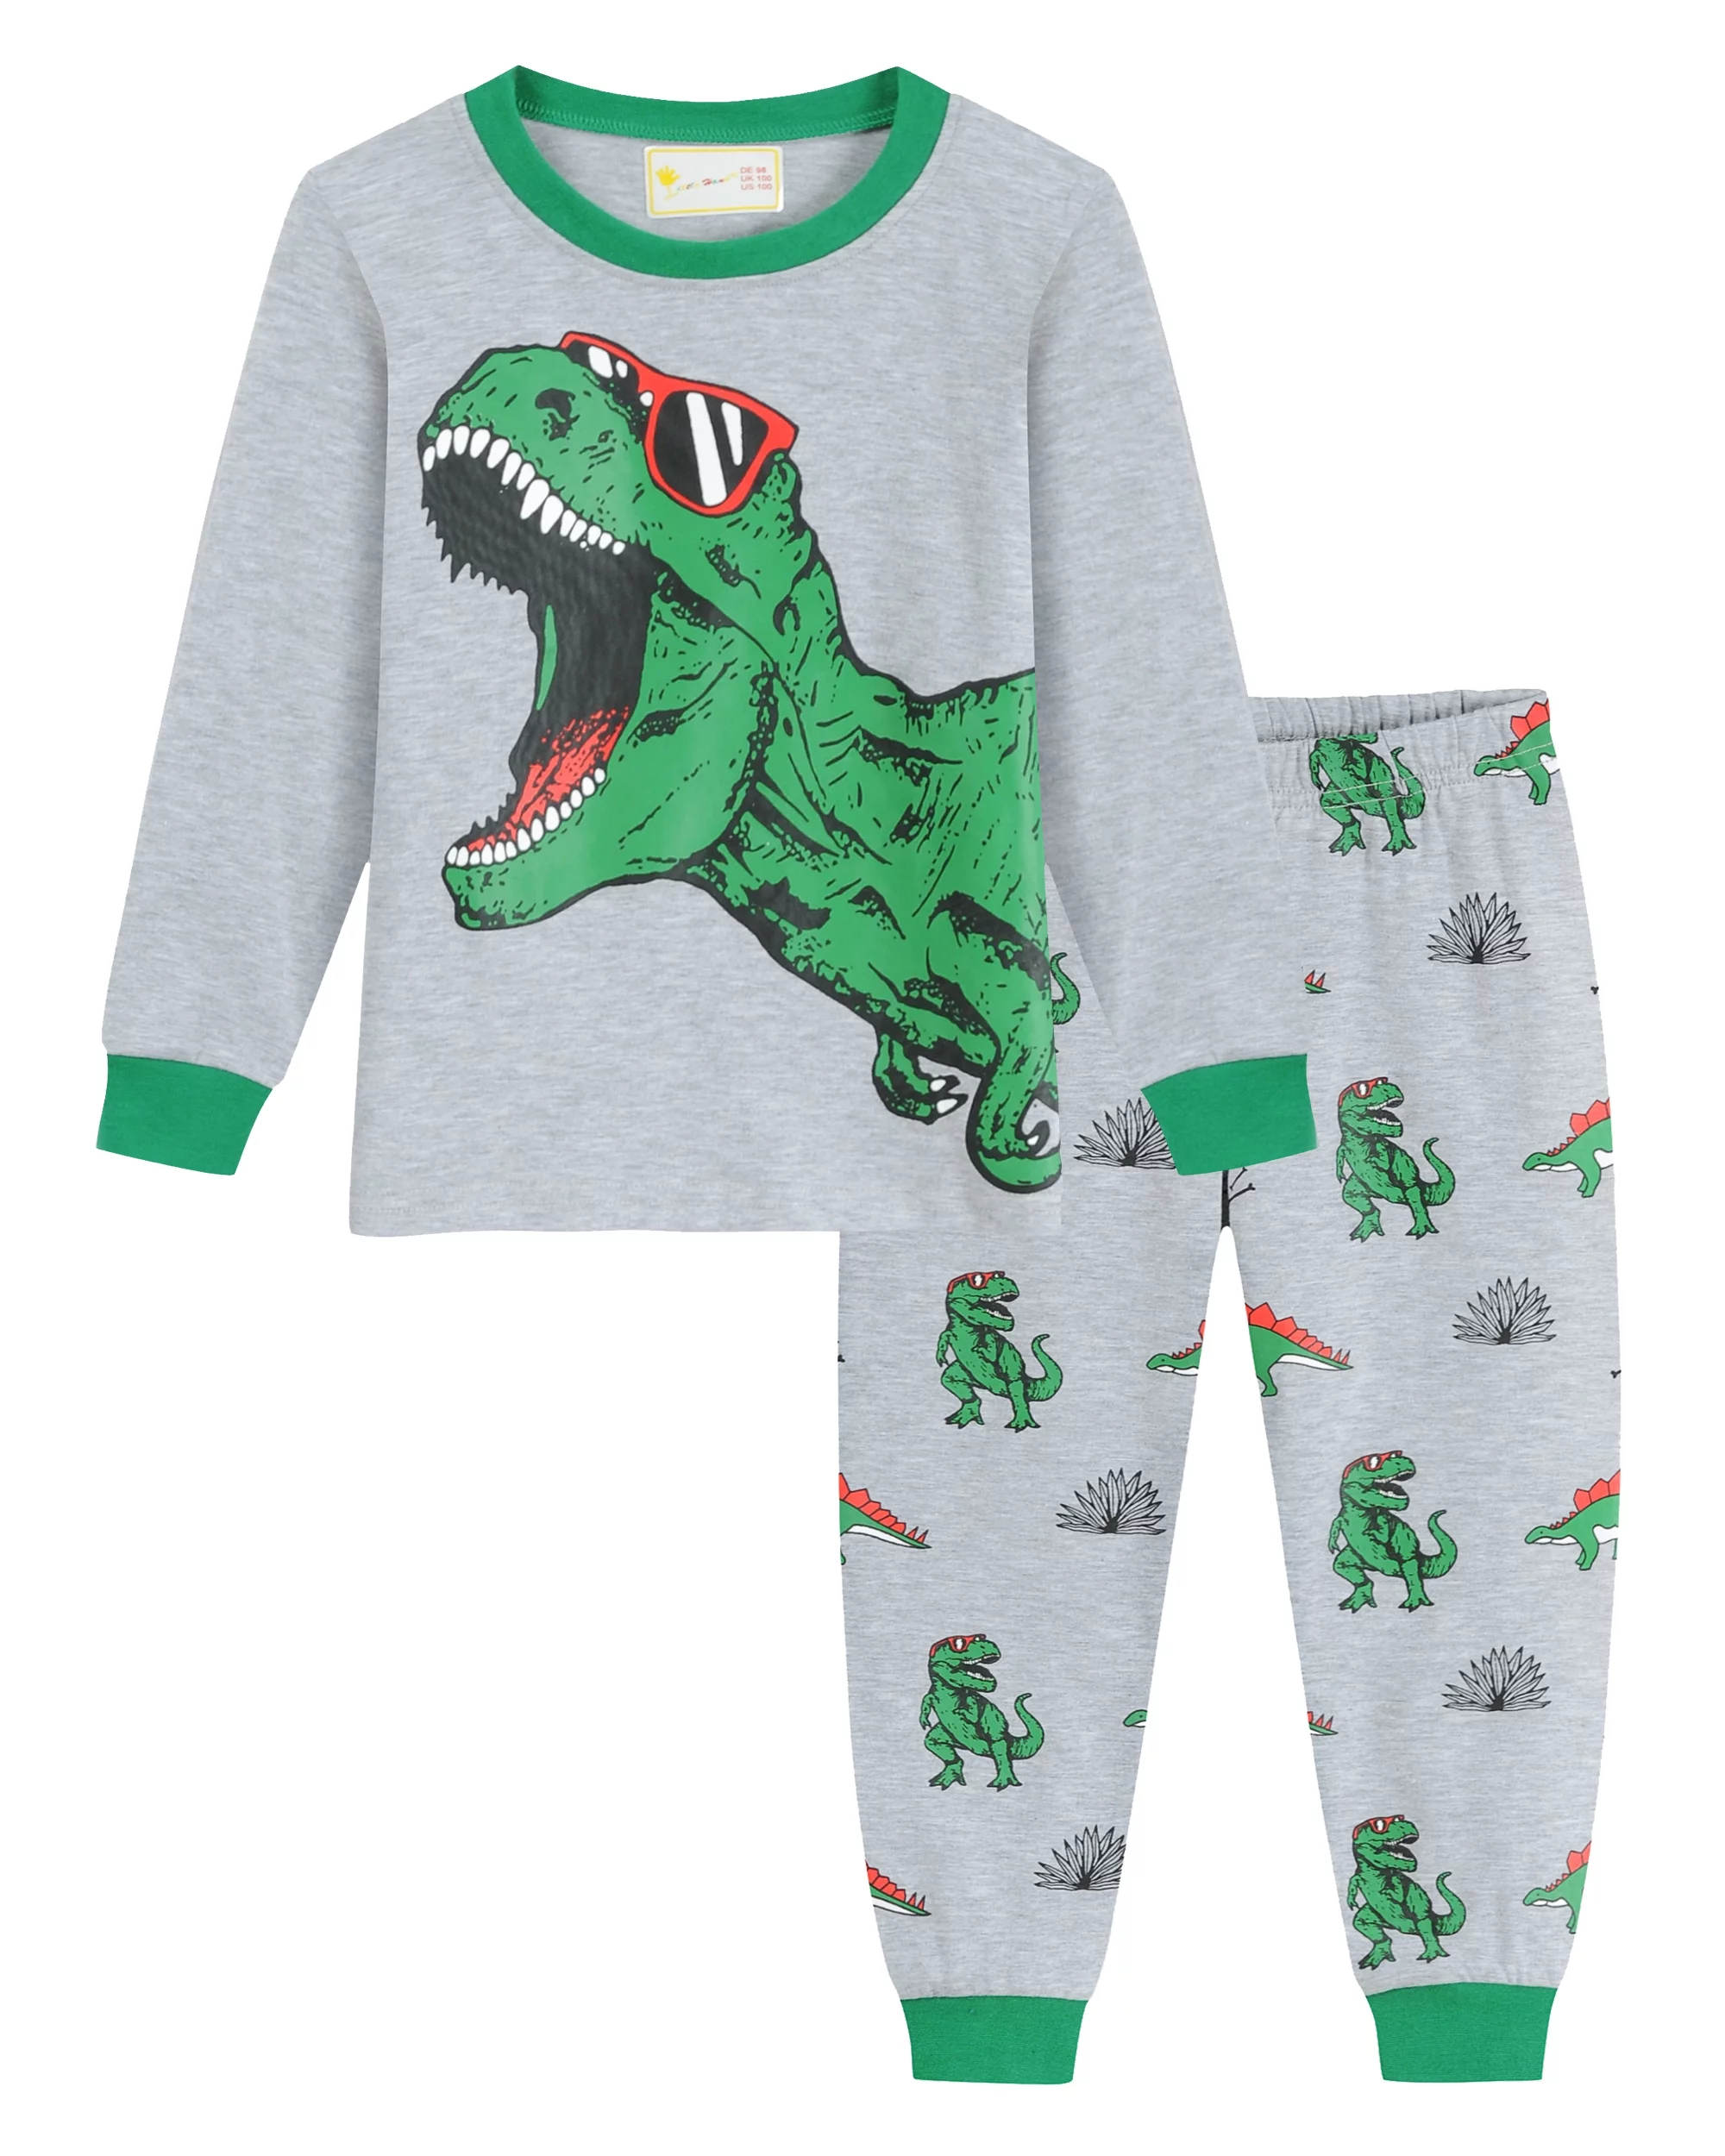 Little Hand Boys Pajamas Dinosaur Cotton Kids 2 Piece Pjs Sleepwear 7T